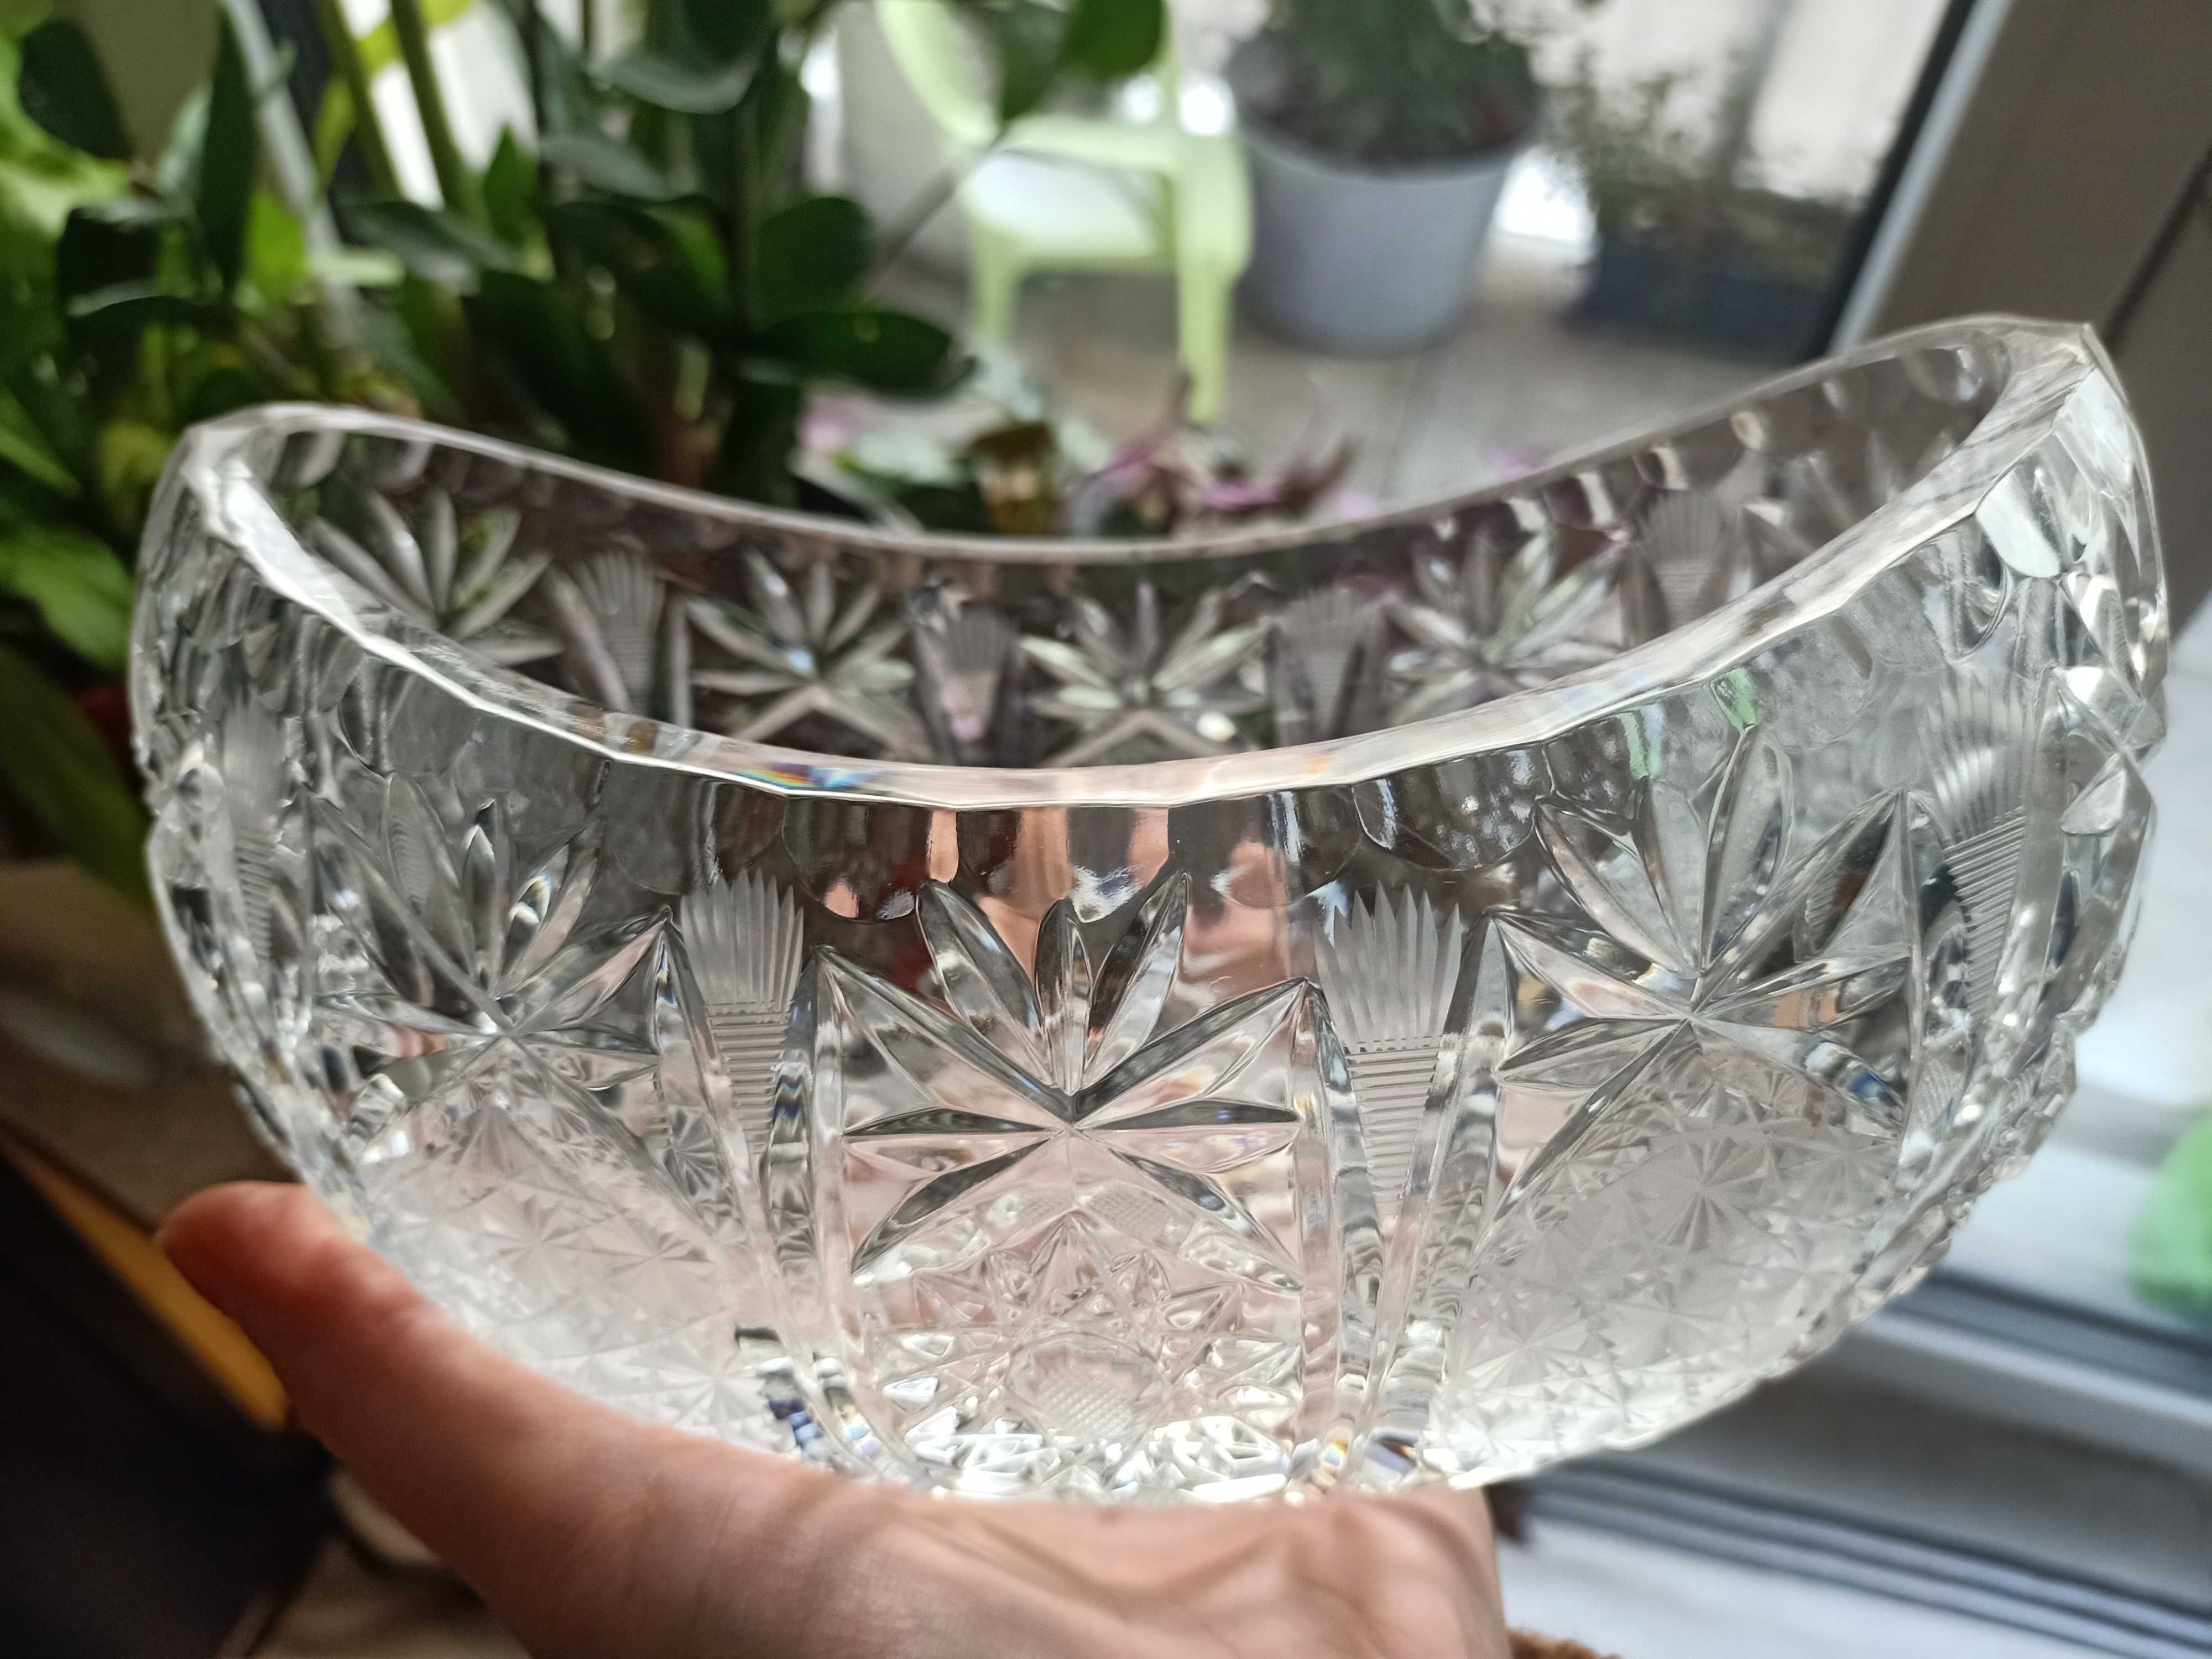 kryształ w kształcie łódki bombonierka